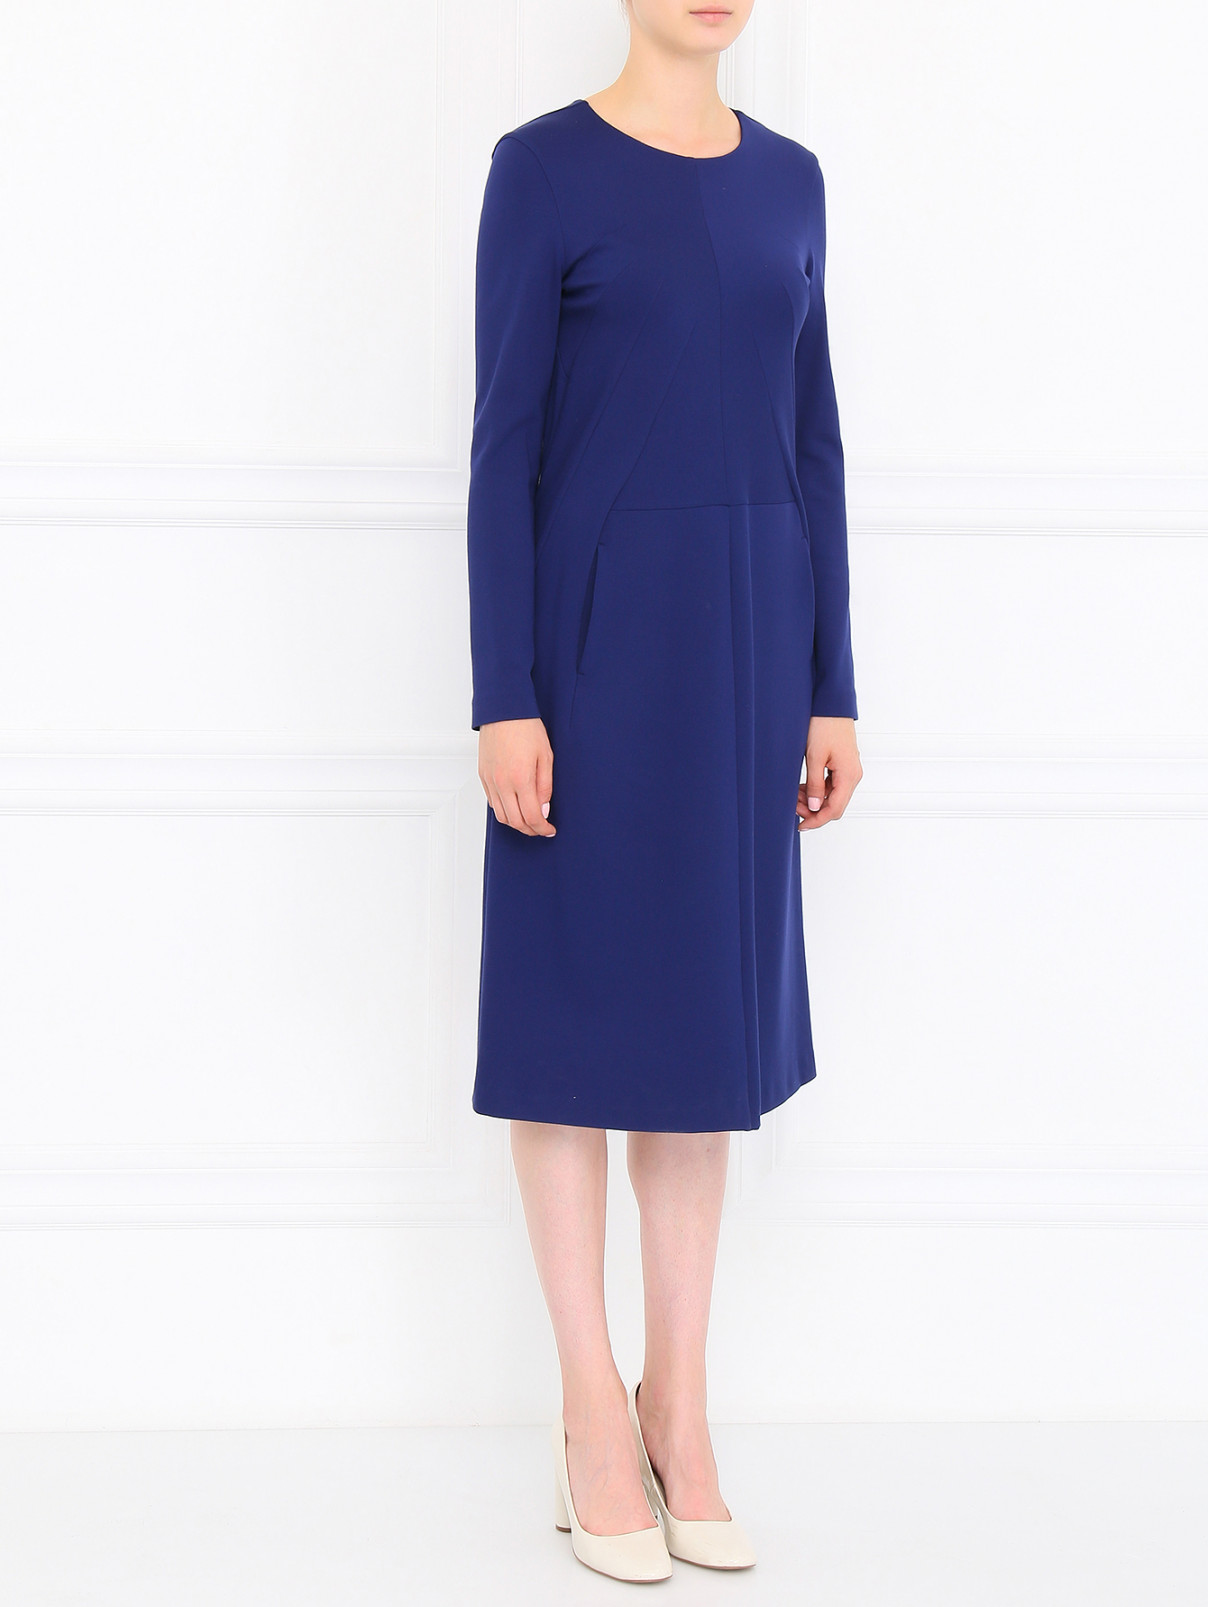 Платье-футляр с боковыми карманами Jil Sander  –  Модель Общий вид  – Цвет:  Синий